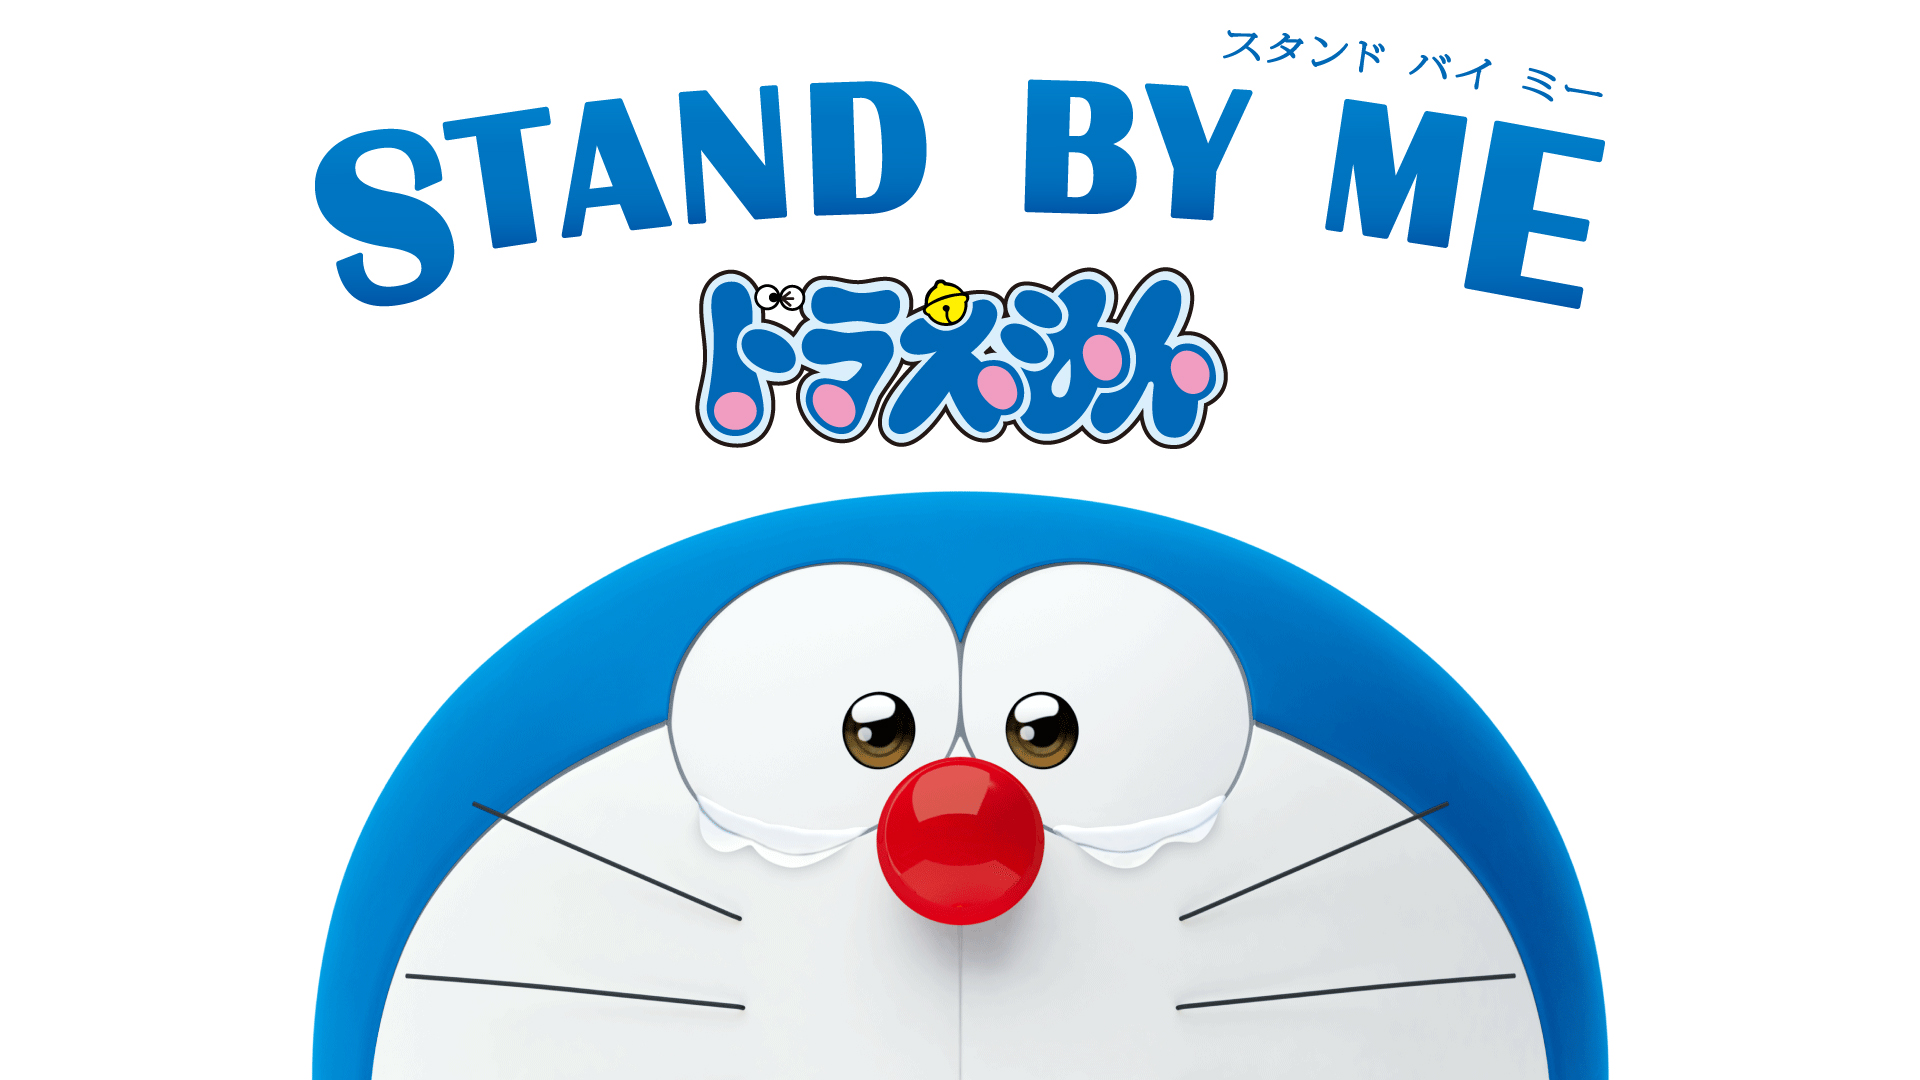 Doraemon Wallpapers Hd Pixelstalk Net